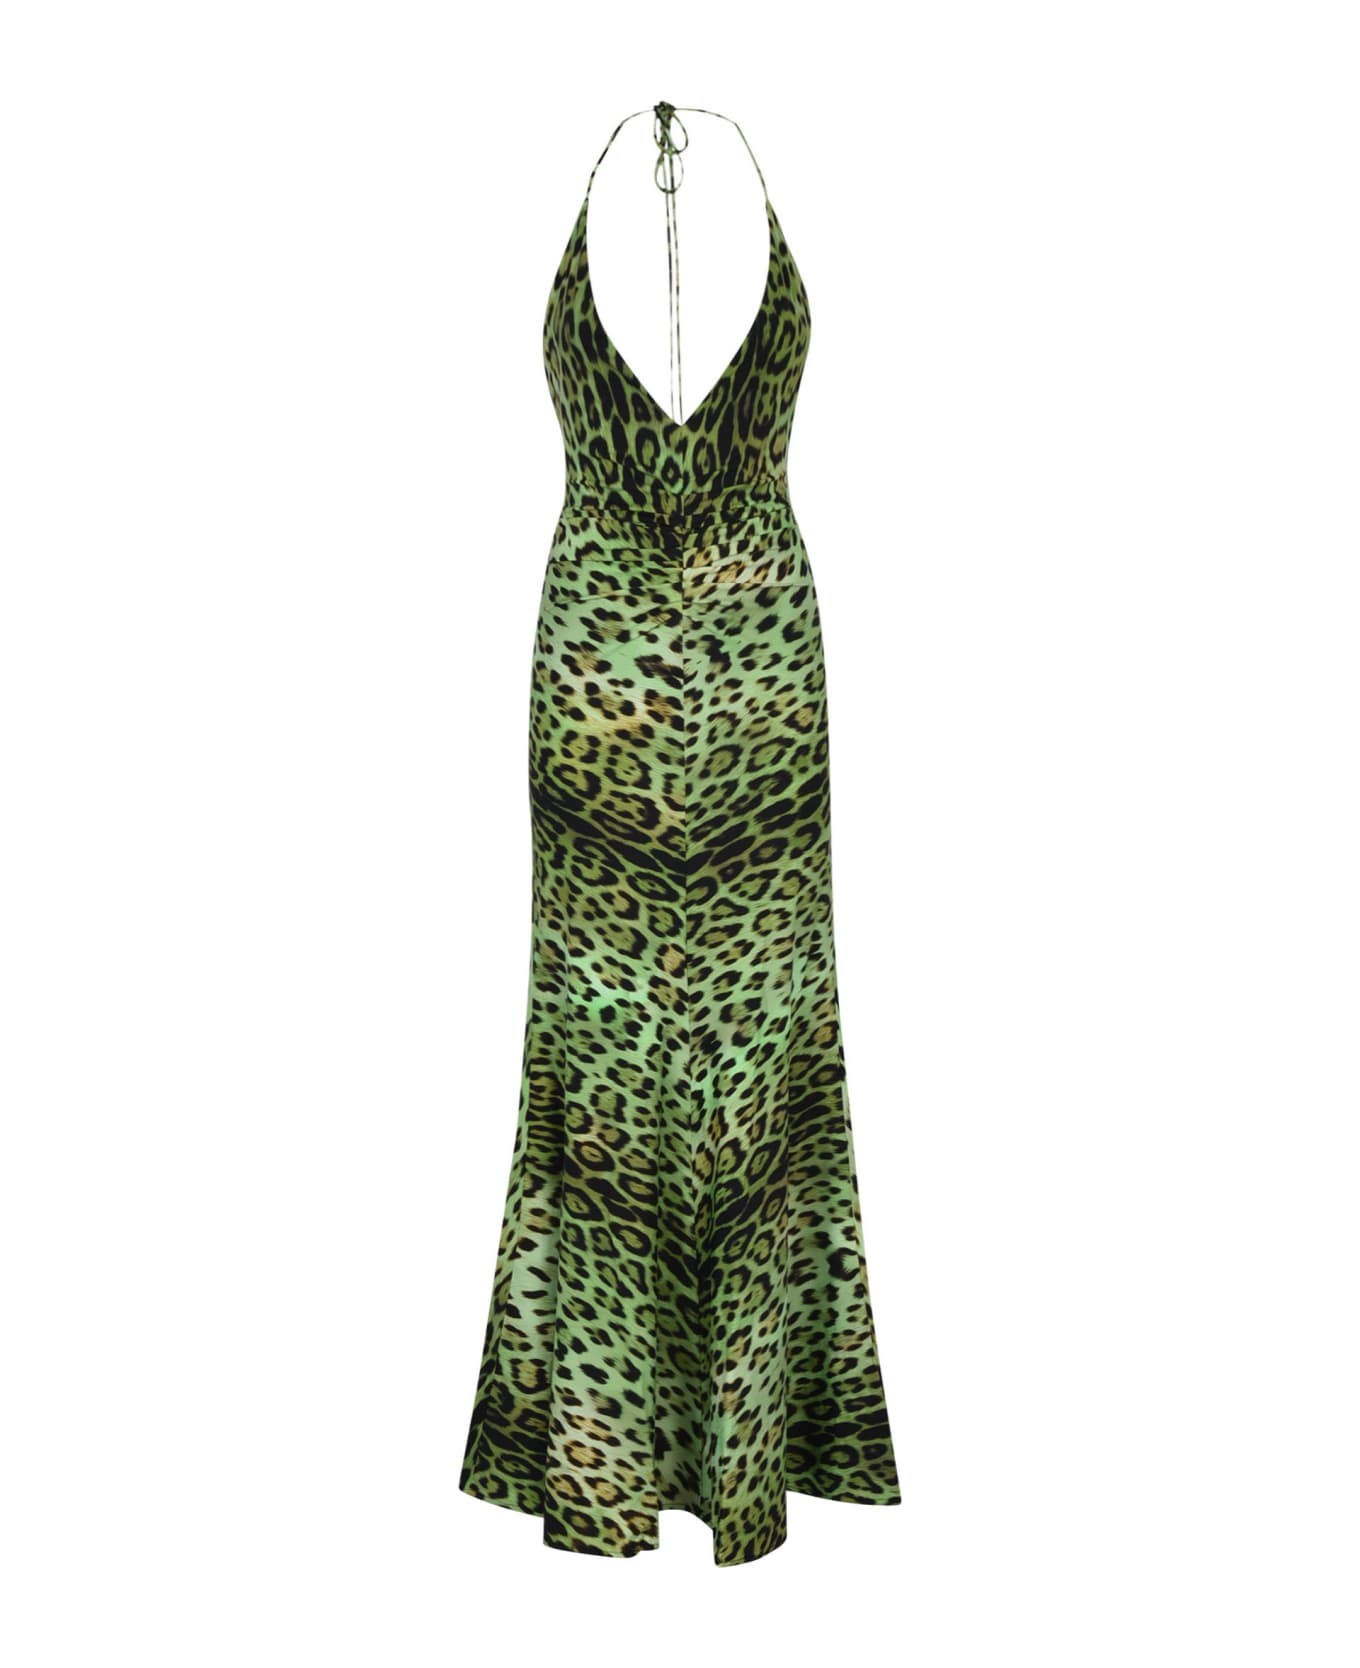 Roberto Cavalli Jaguar Print Dress - Lime